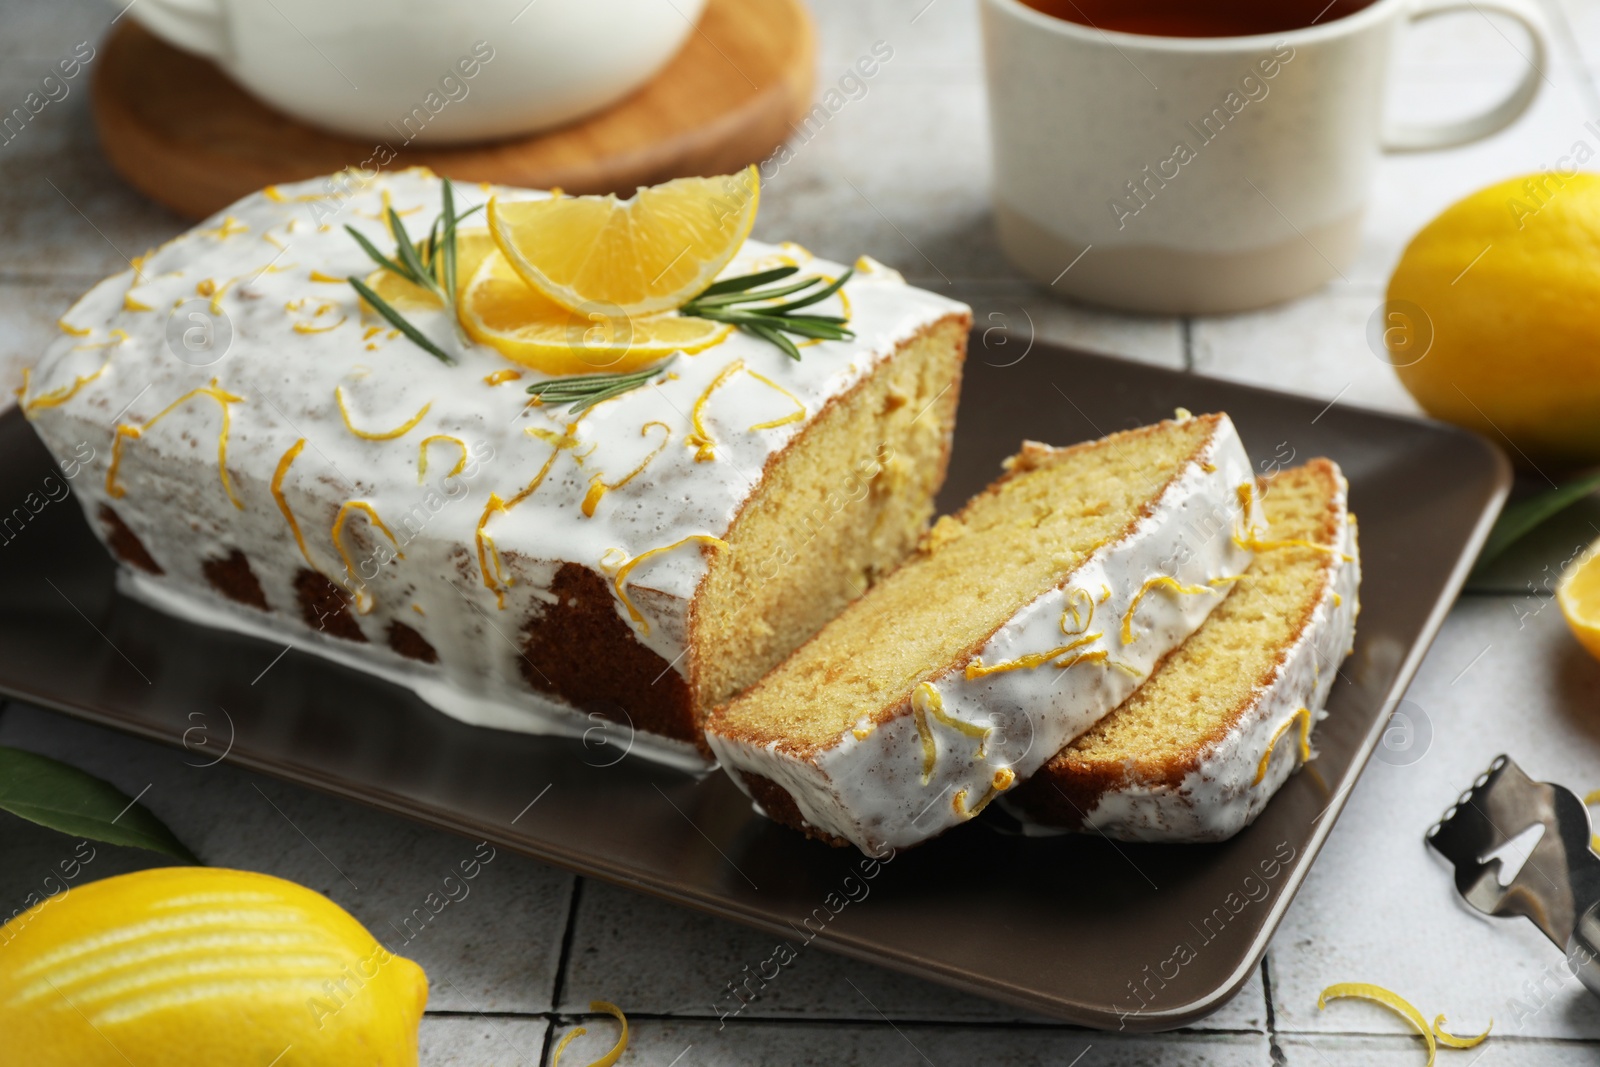 Photo of Tasty lemon cake with glaze and citrus fruits on table, closeup